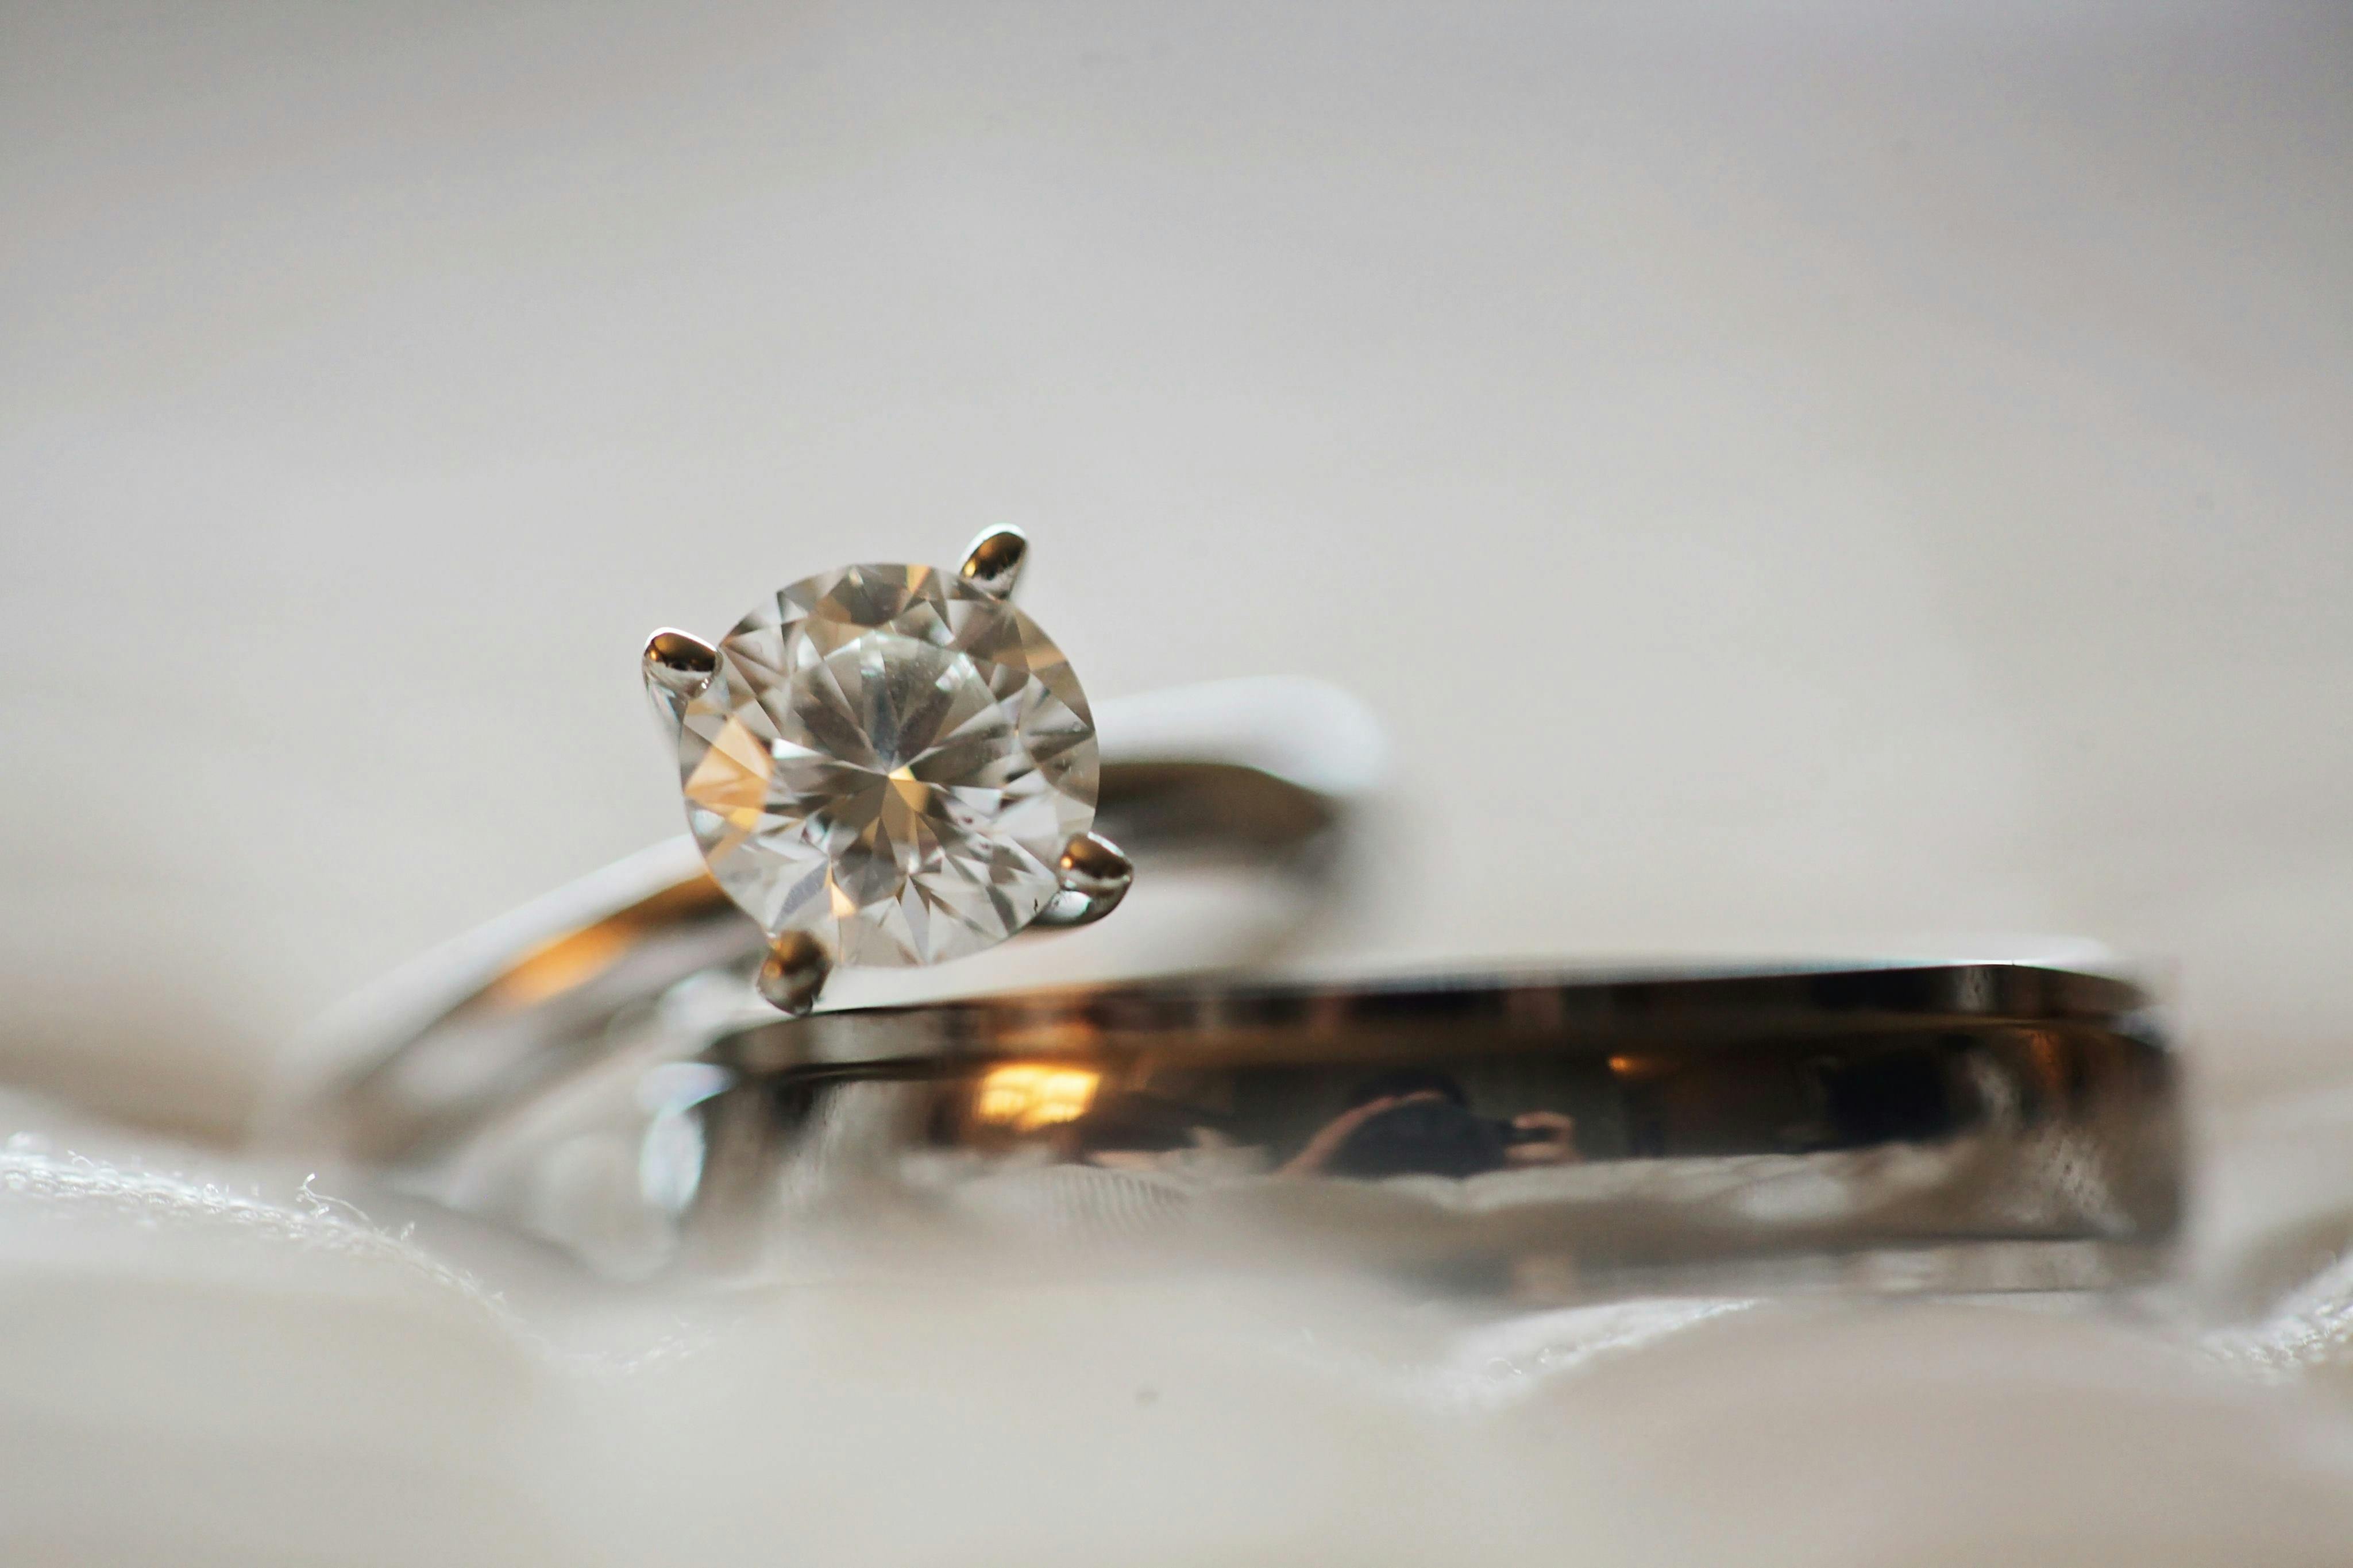 Columbus' Supplier of Diamond Engagement Rings